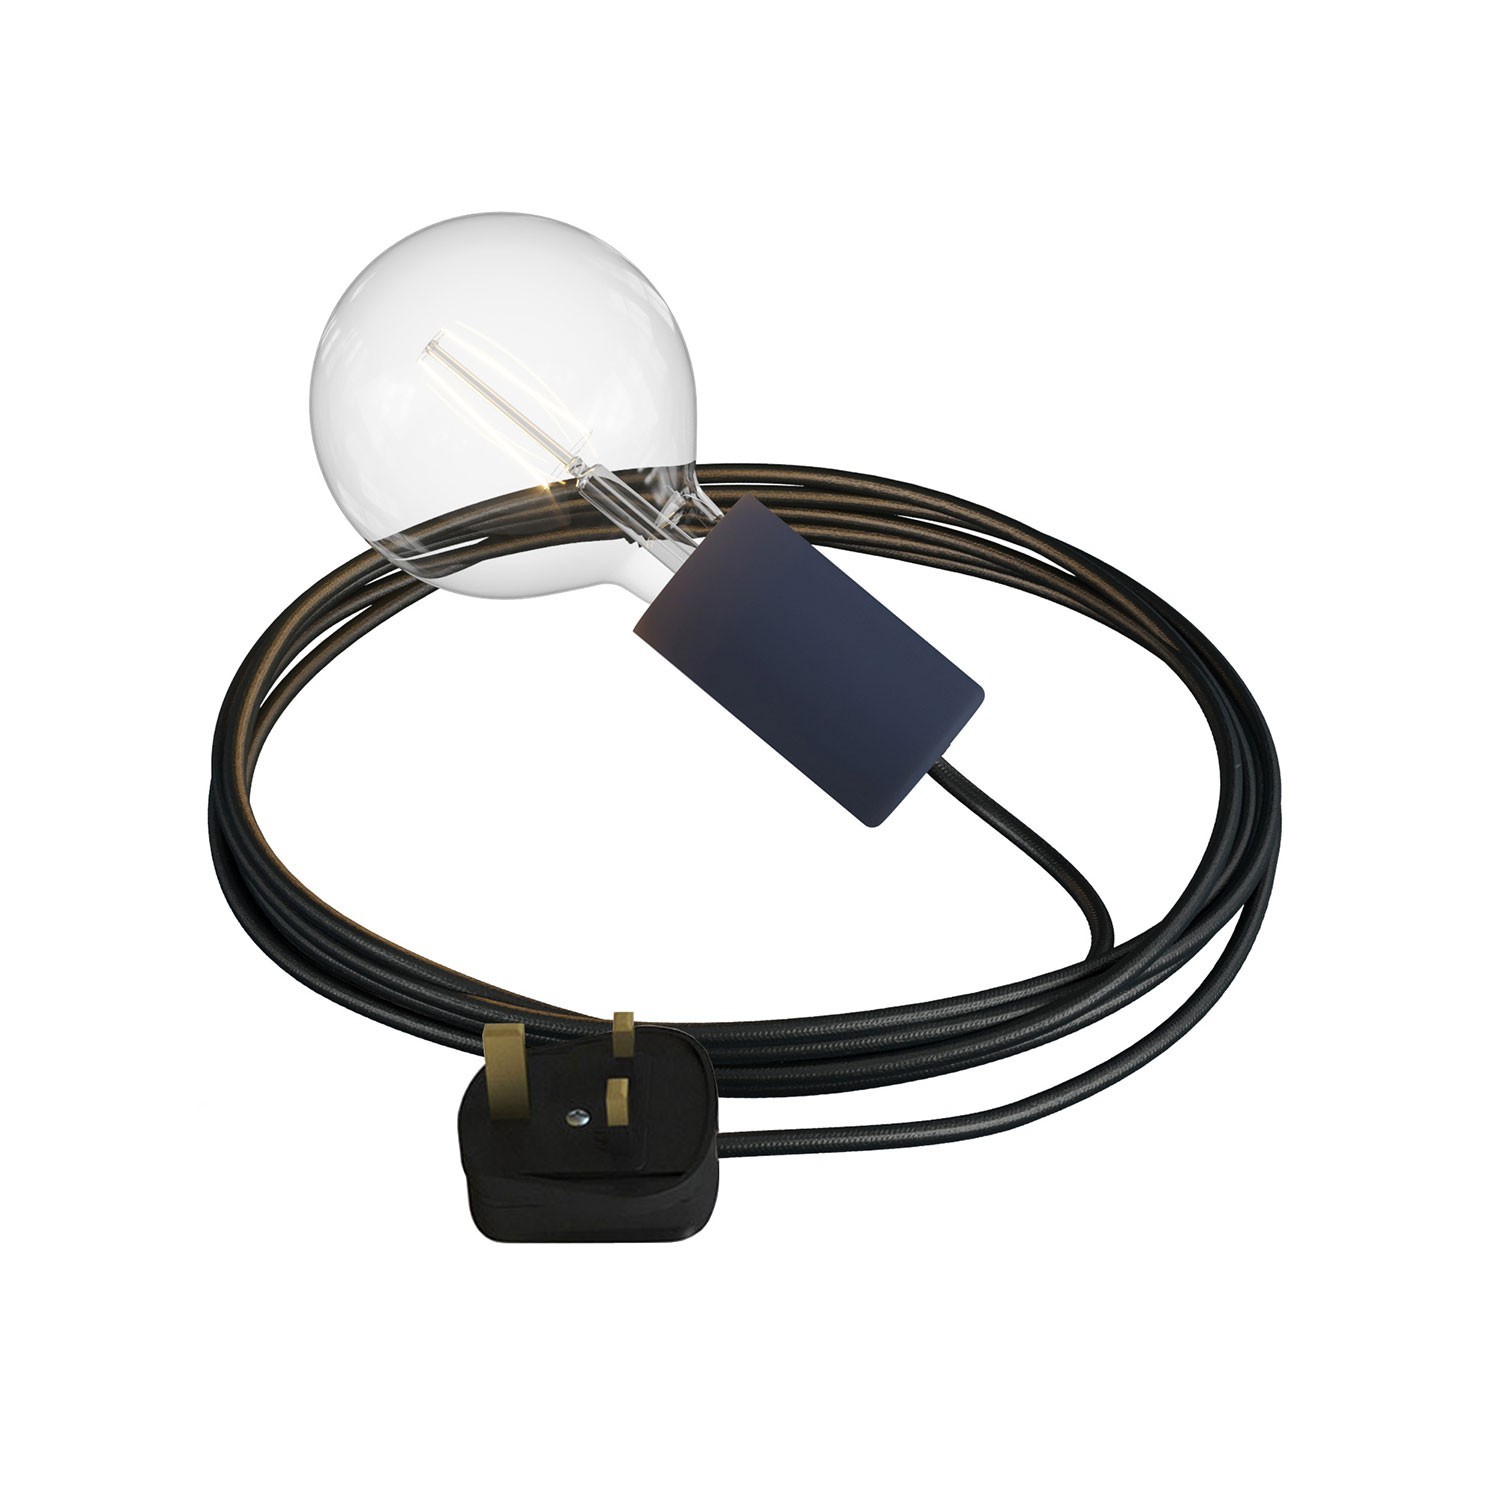 Eiva Snake Elegant, portable outdoor lamp, 5 m textile cable, UK plug and IP65 waterproof lamp holder